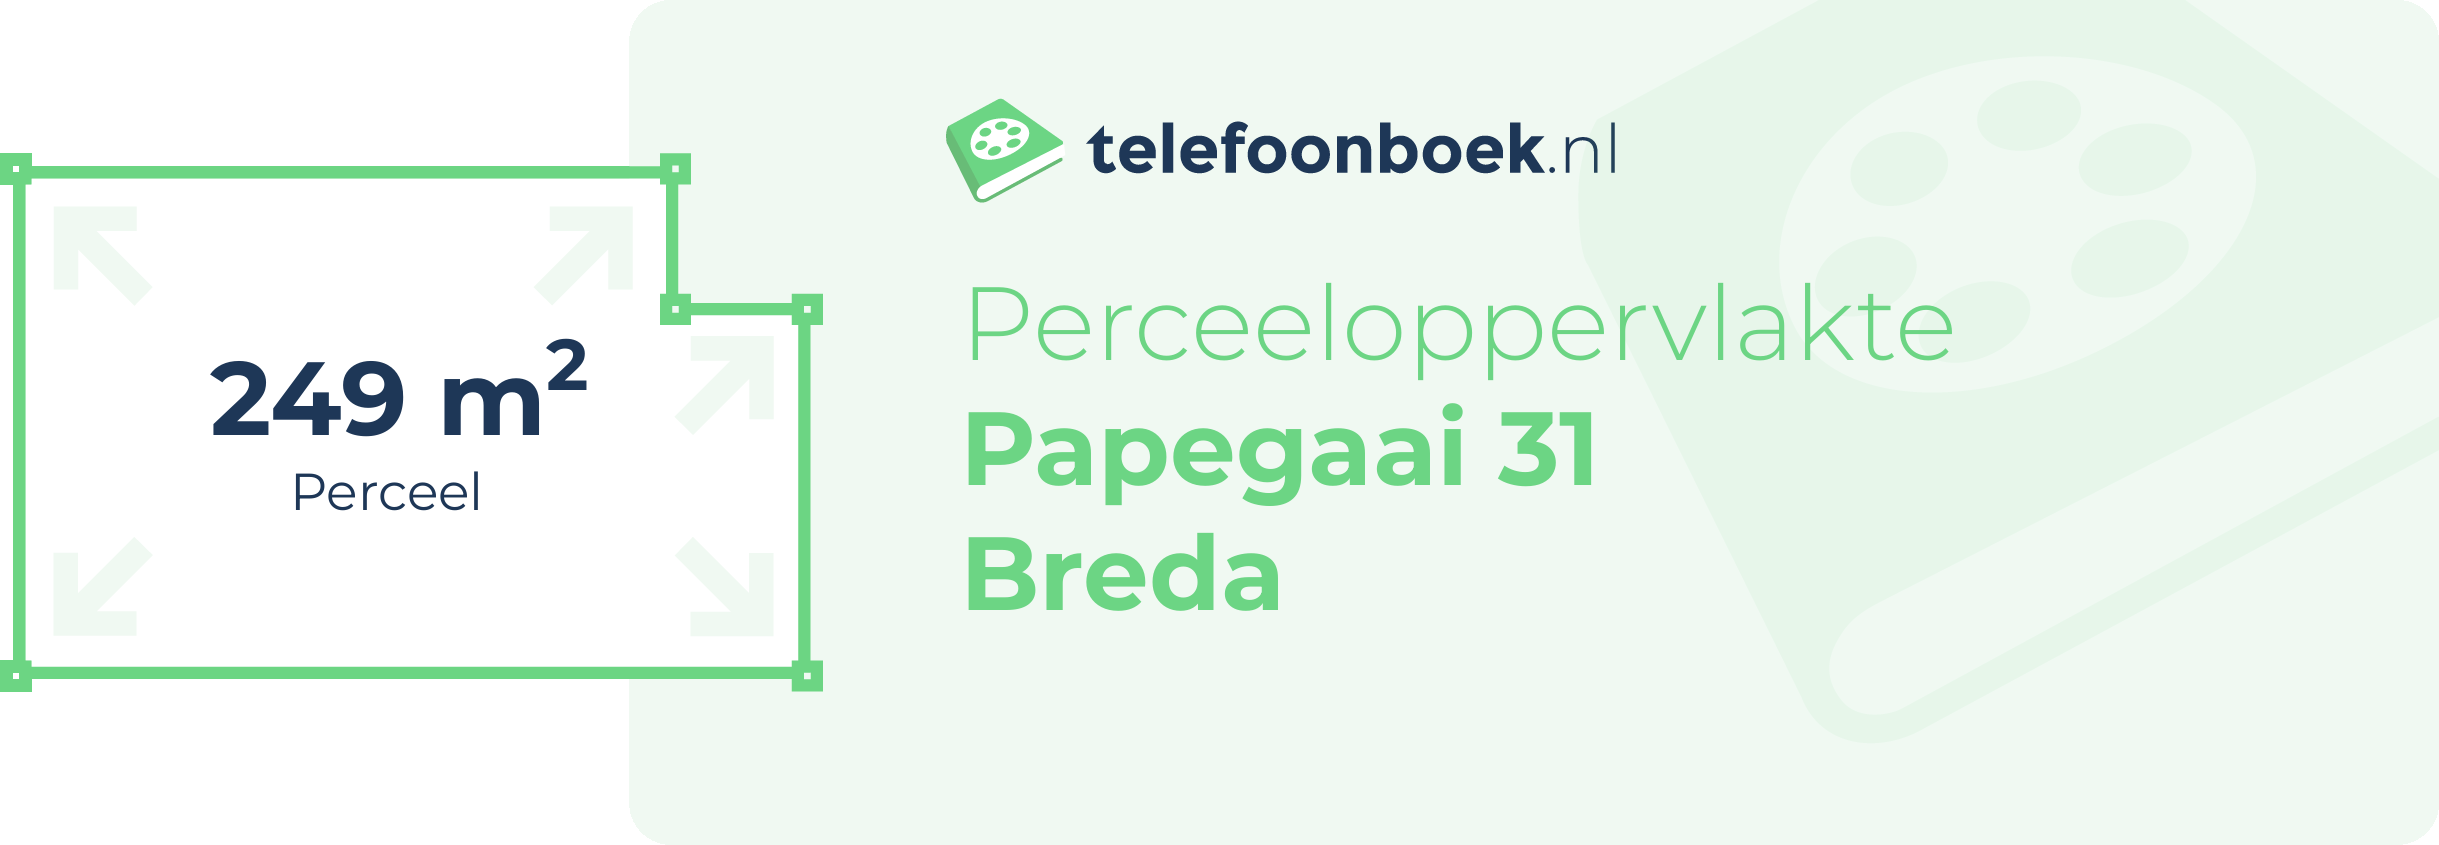 Perceeloppervlakte Papegaai 31 Breda